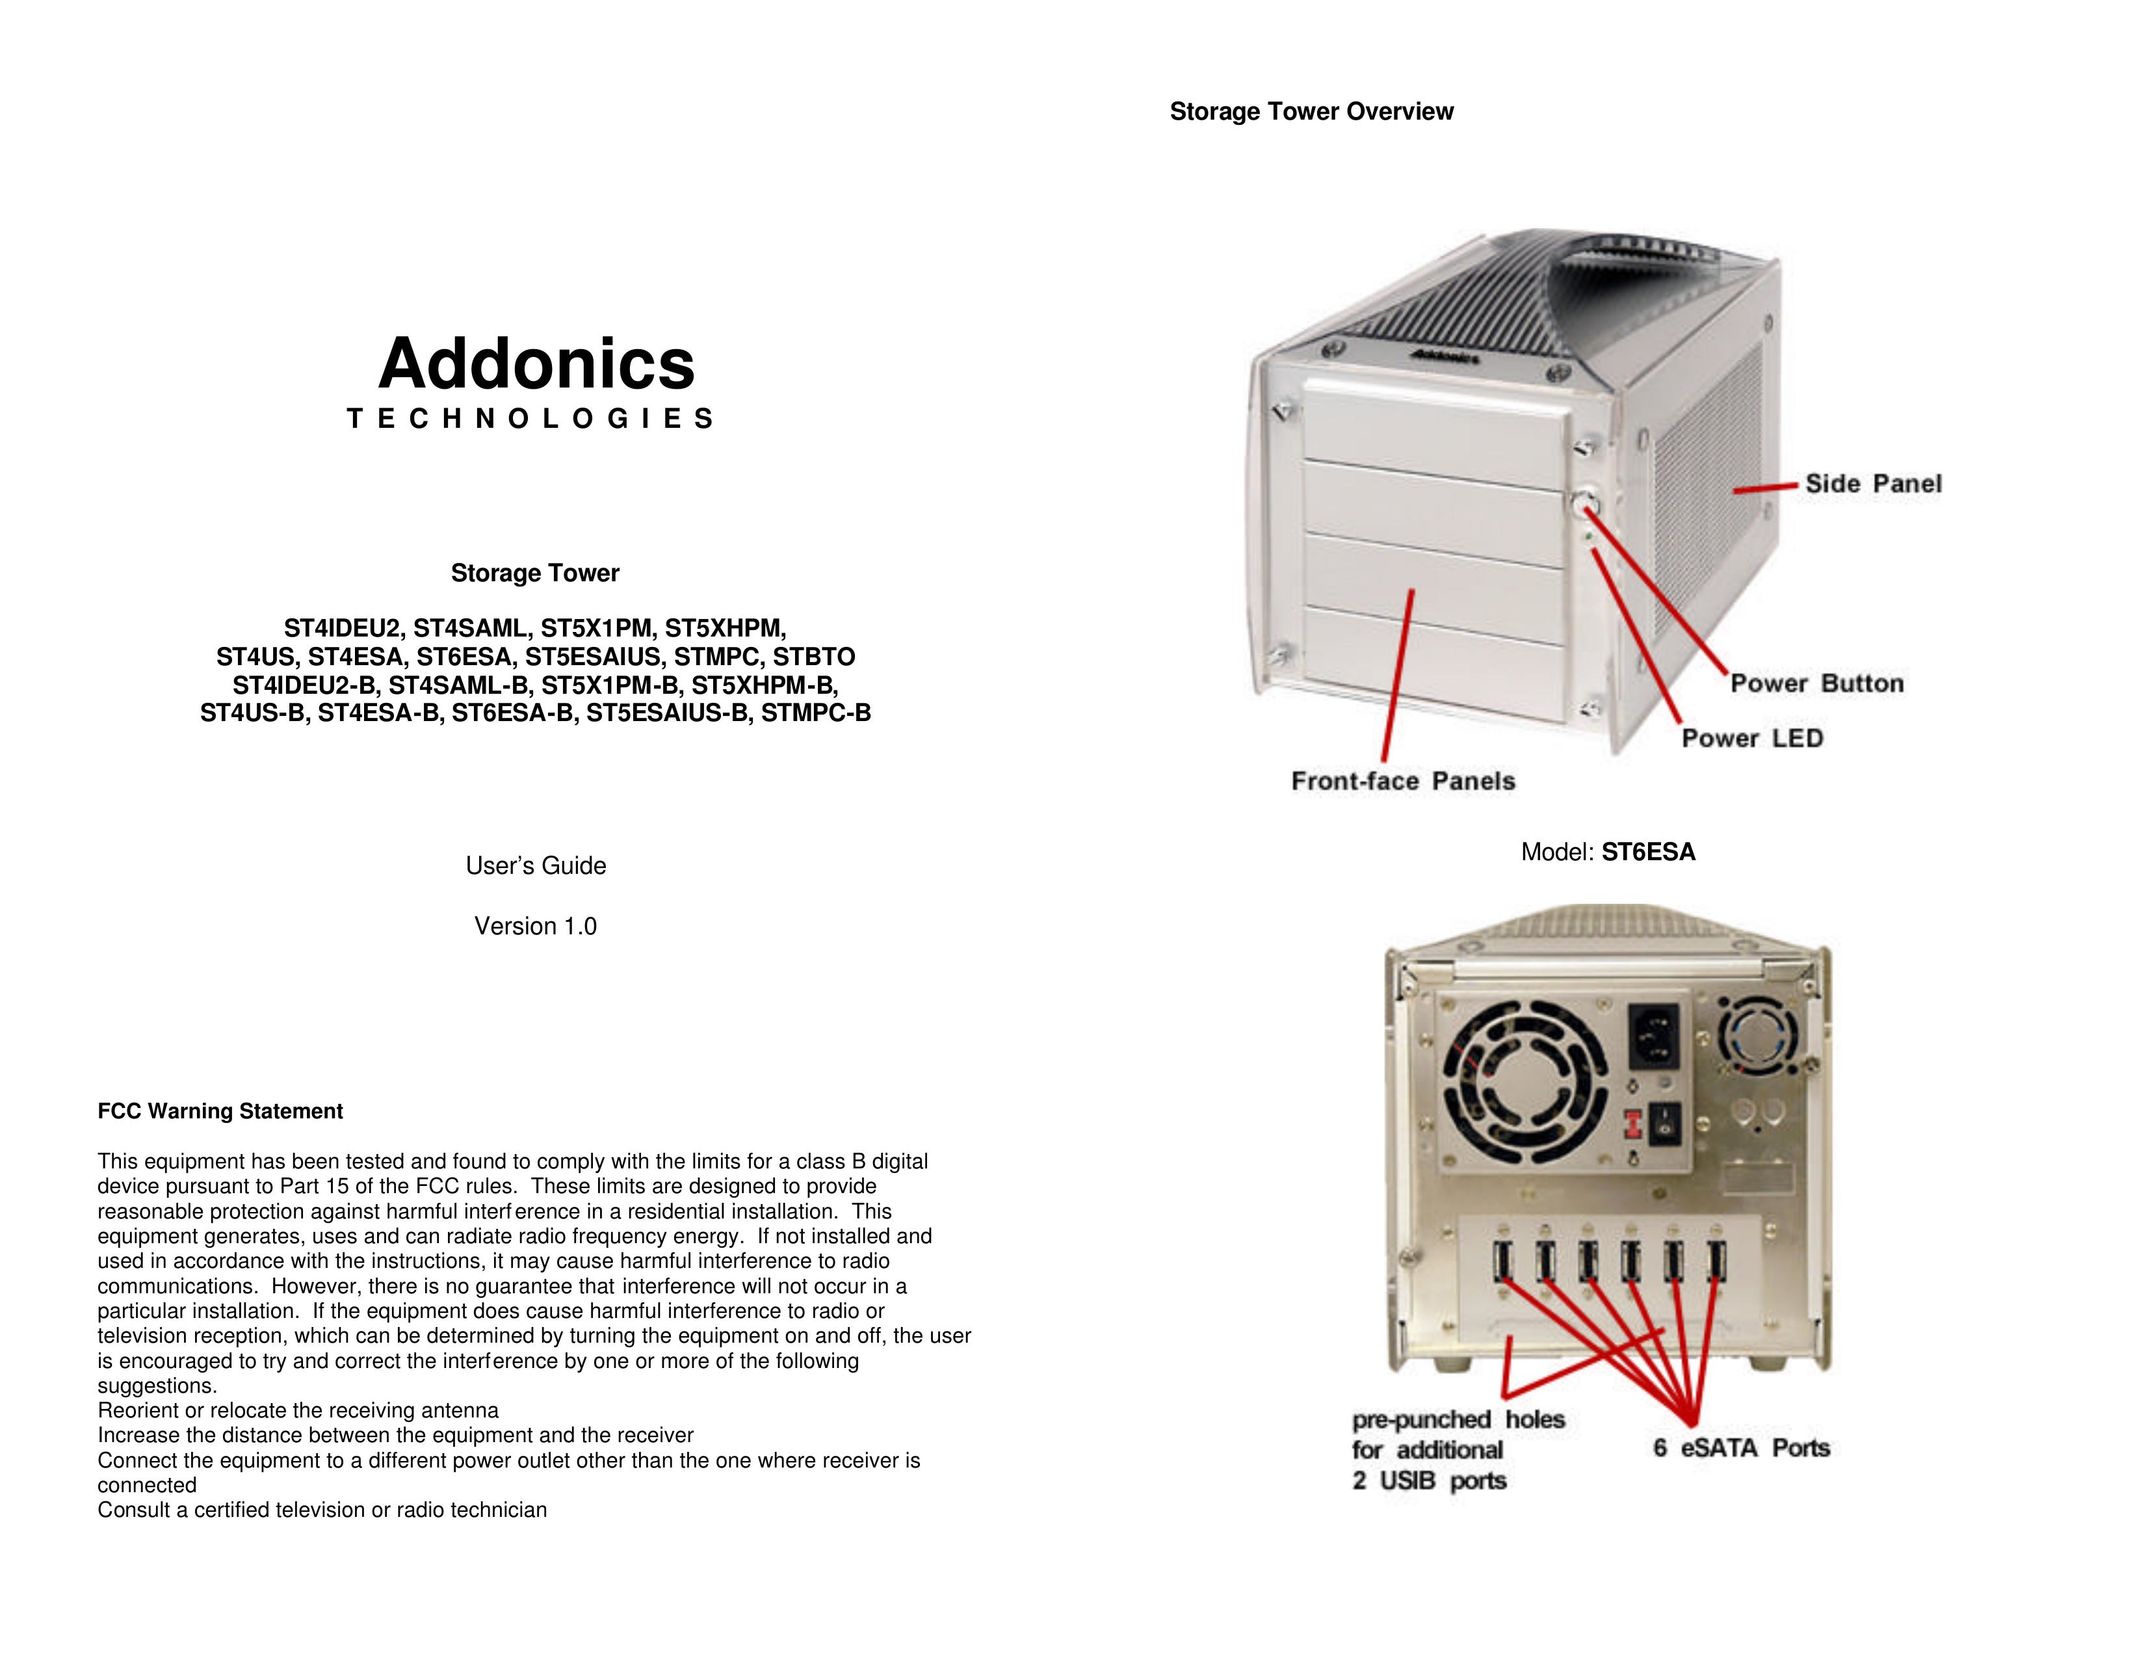 Addonics Technologies STMPC Portable Media Storage User Manual